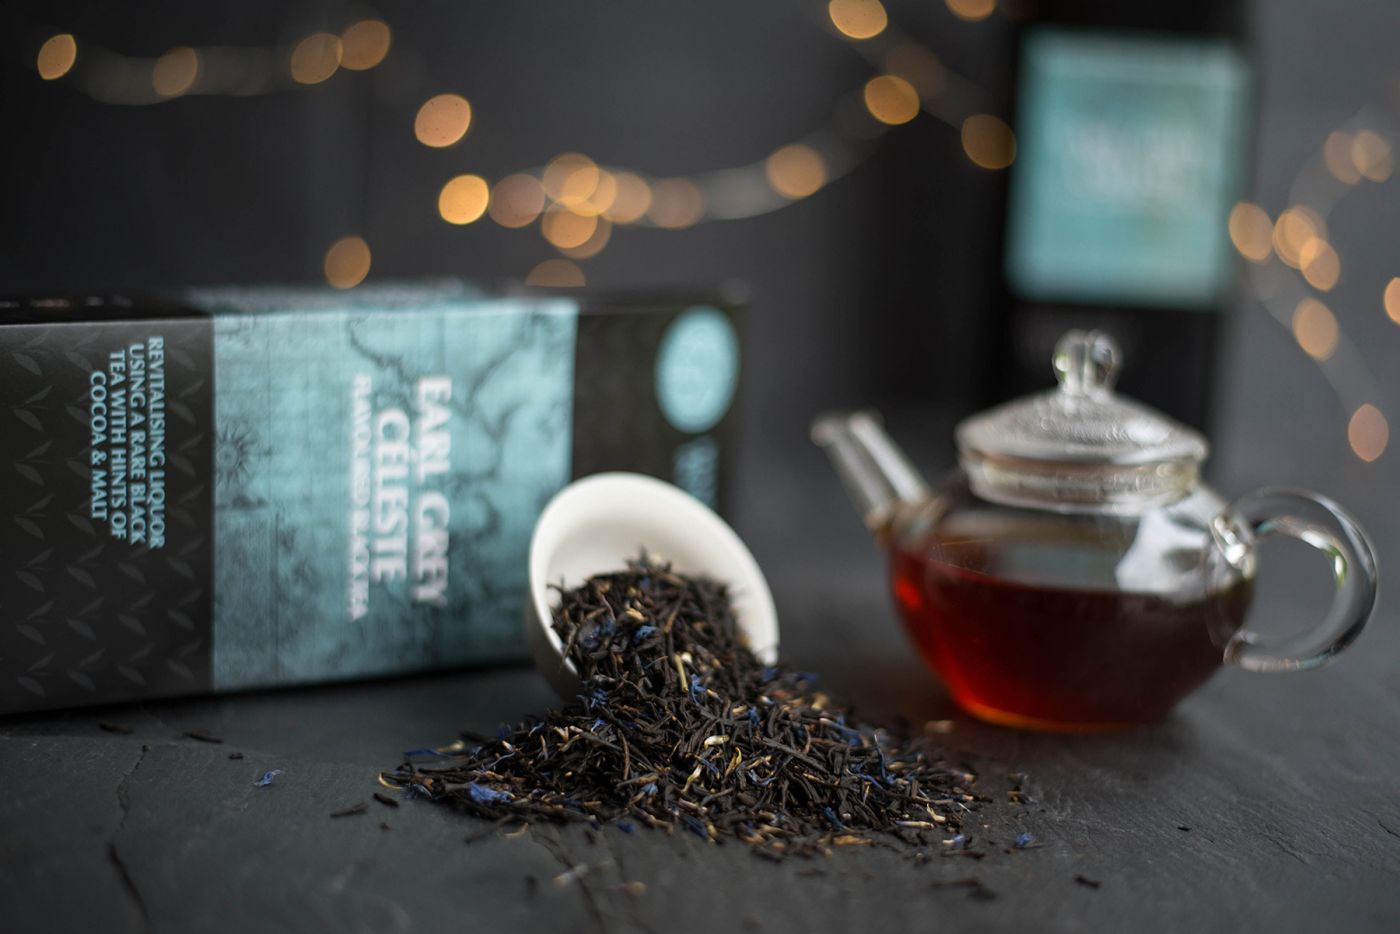 Imperial Earl Grey Tea  Unique Oolong Based Loose Leaf Blend